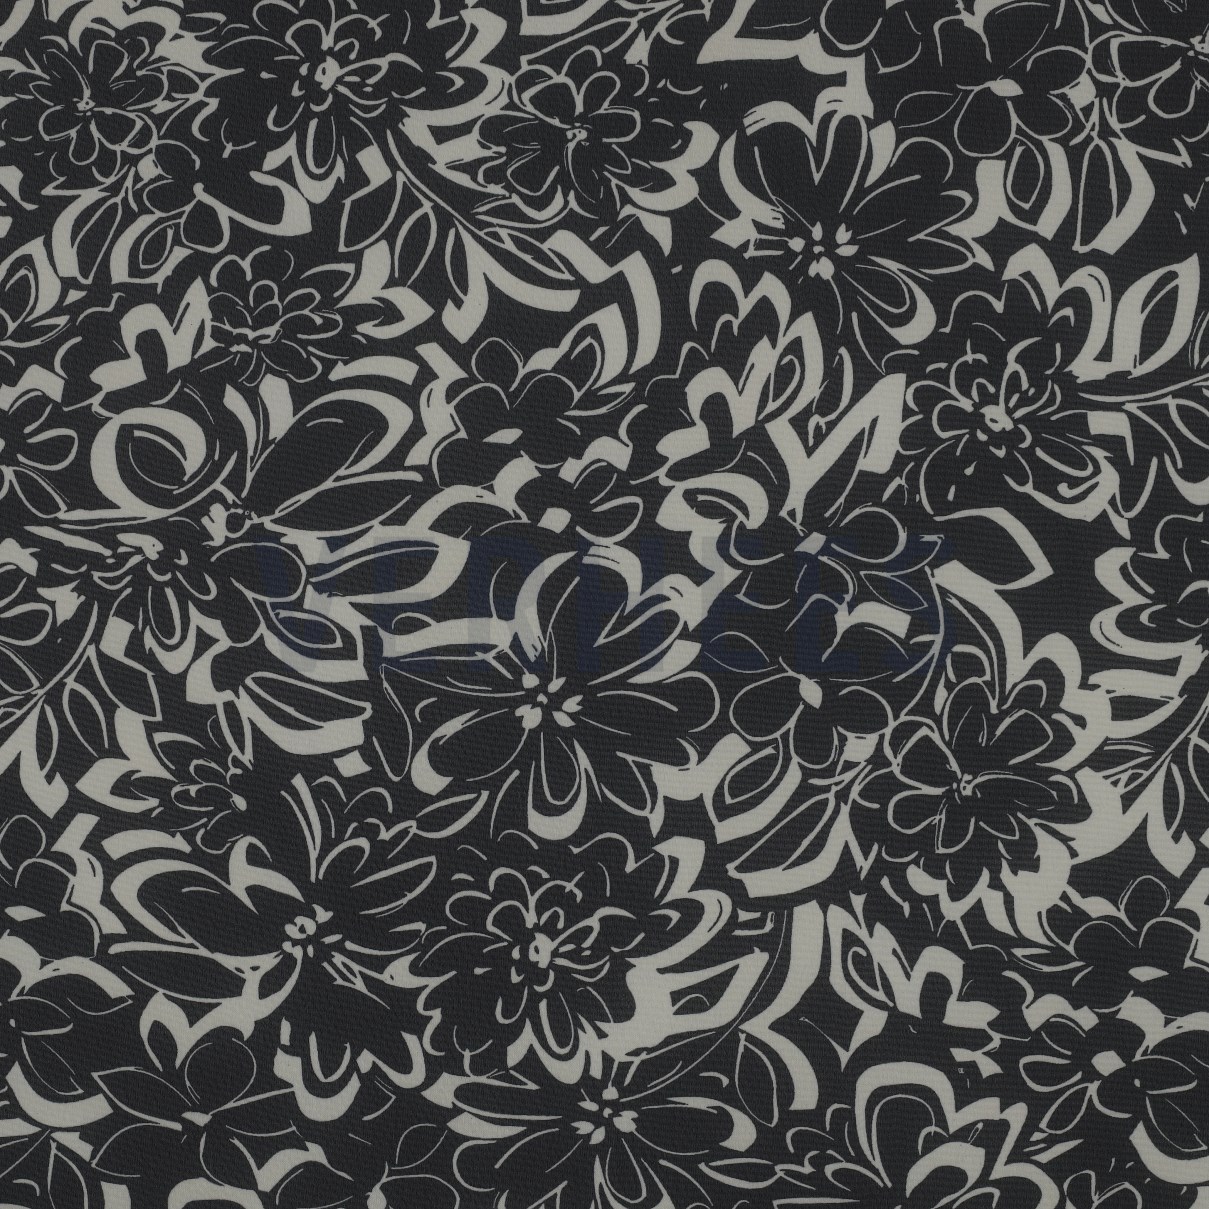 CHIFFON FLOWERS BLACK (high resolution)